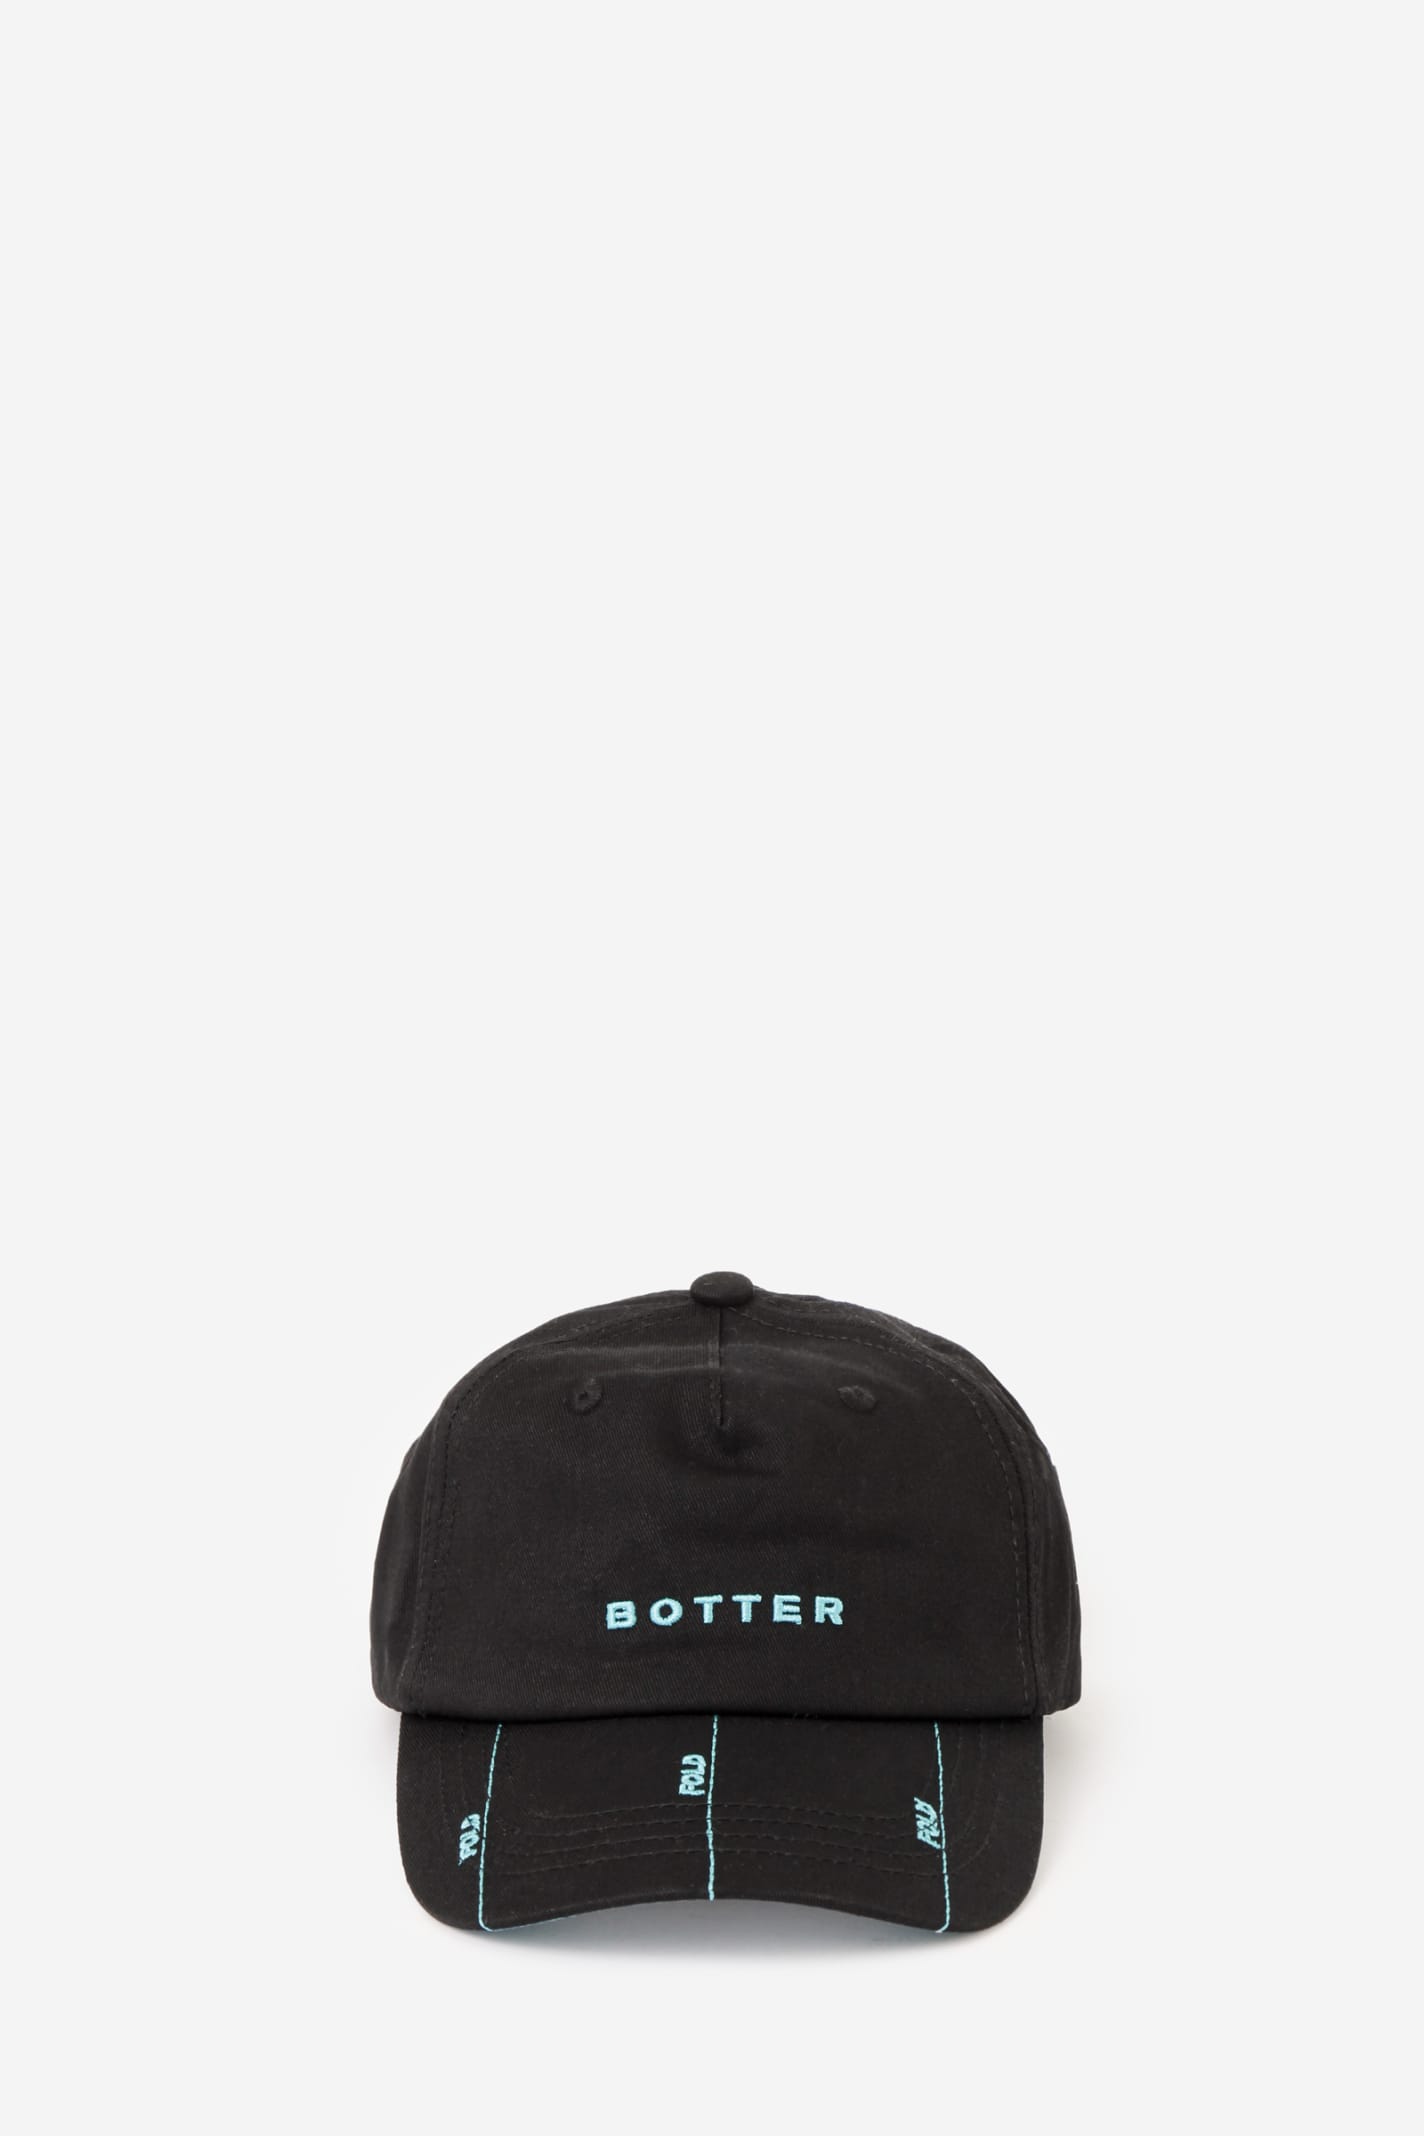 Botter Fold Hats